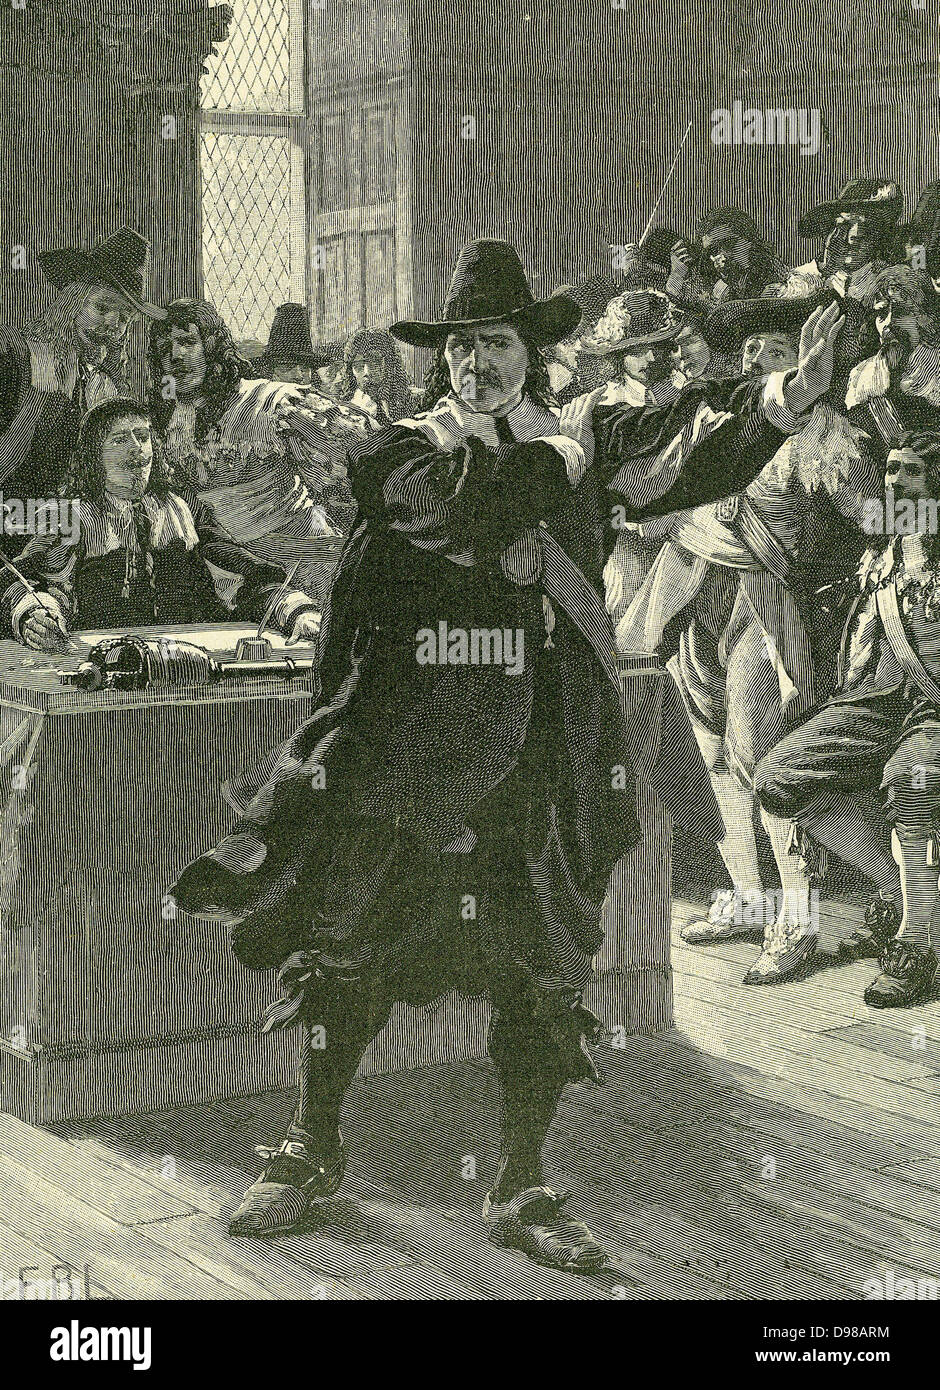 Oliver Cromwell (1599-1658), englischer Staatsmann. Lord Protector (1653-1658). Cromwell die Entlassung des Rumpfparlament, 1653. Gravur c 1885. Stockfoto